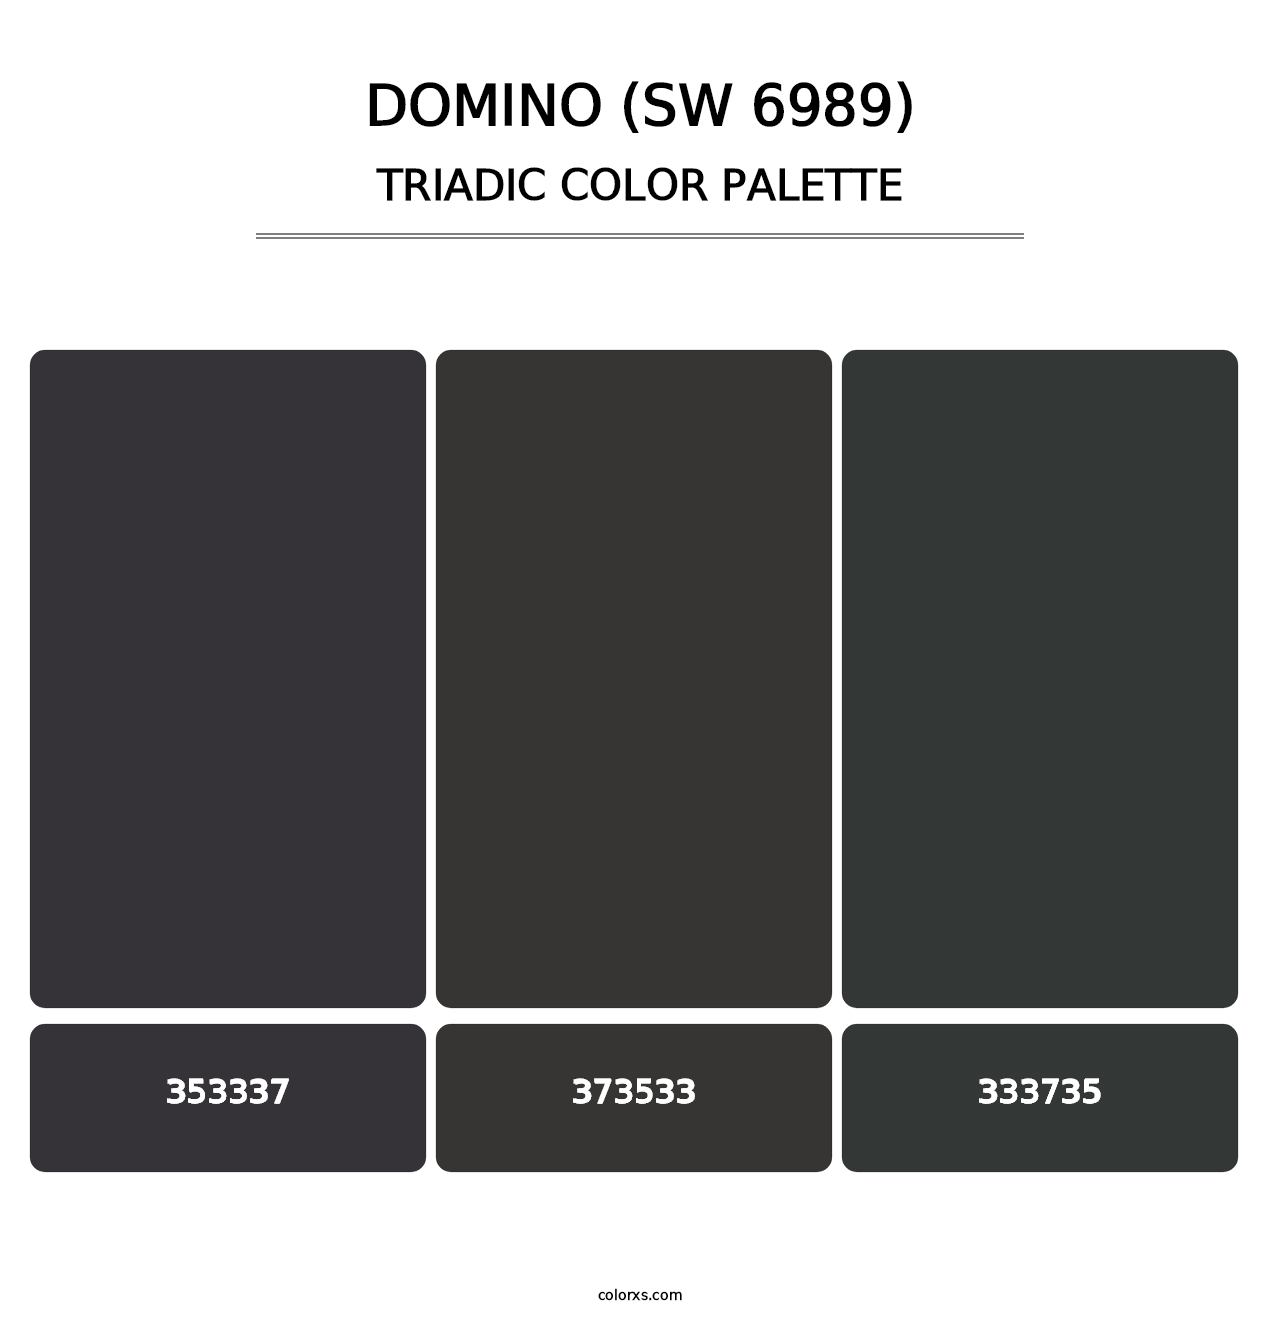 Domino (SW 6989) - Triadic Color Palette